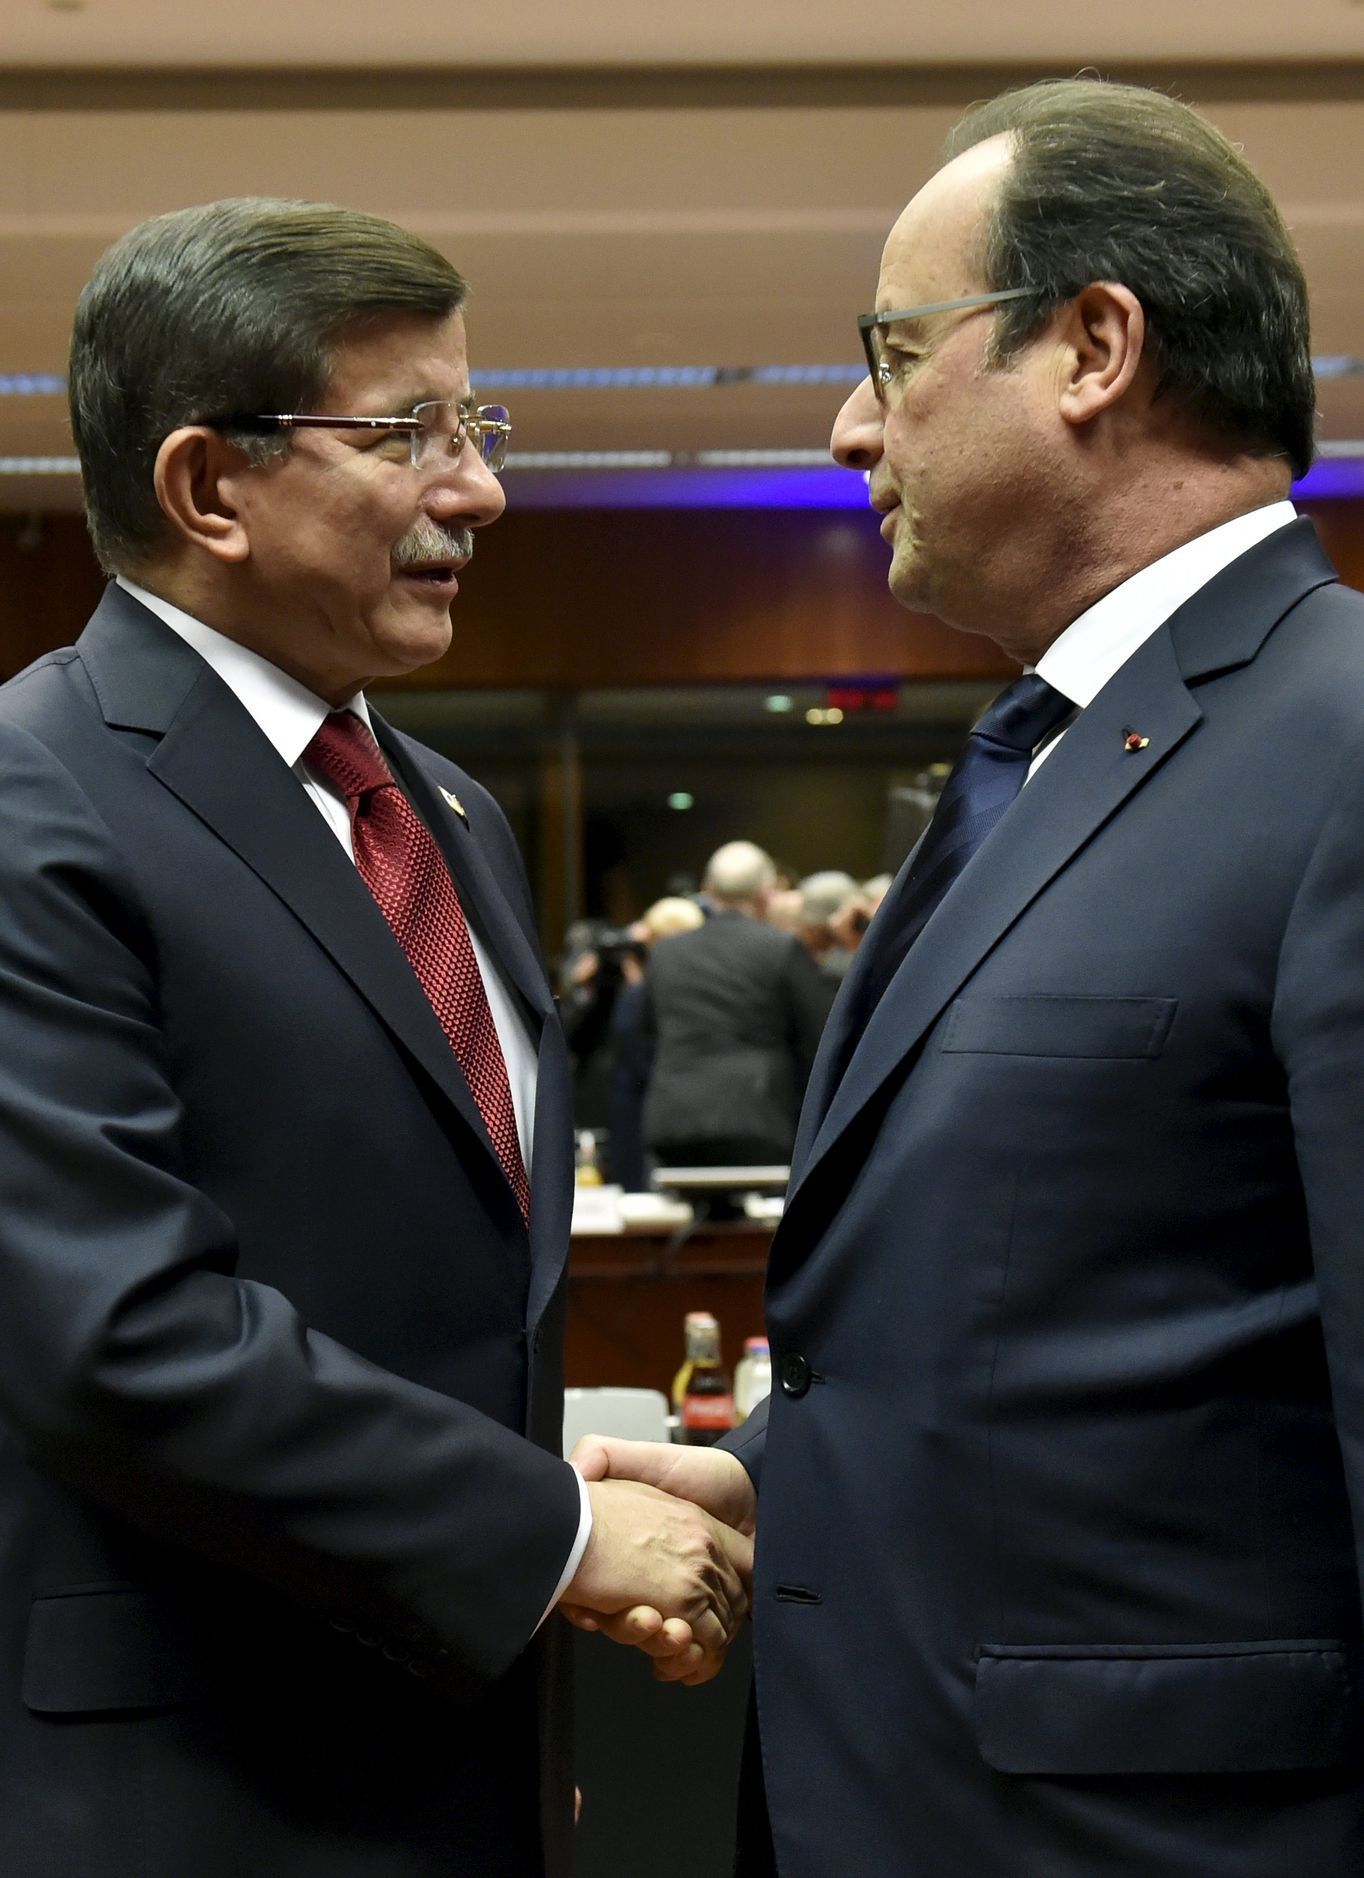 Turecký premiér Davutoglu a francouzský prezident François Hollande na summitu EU s Tureckem.